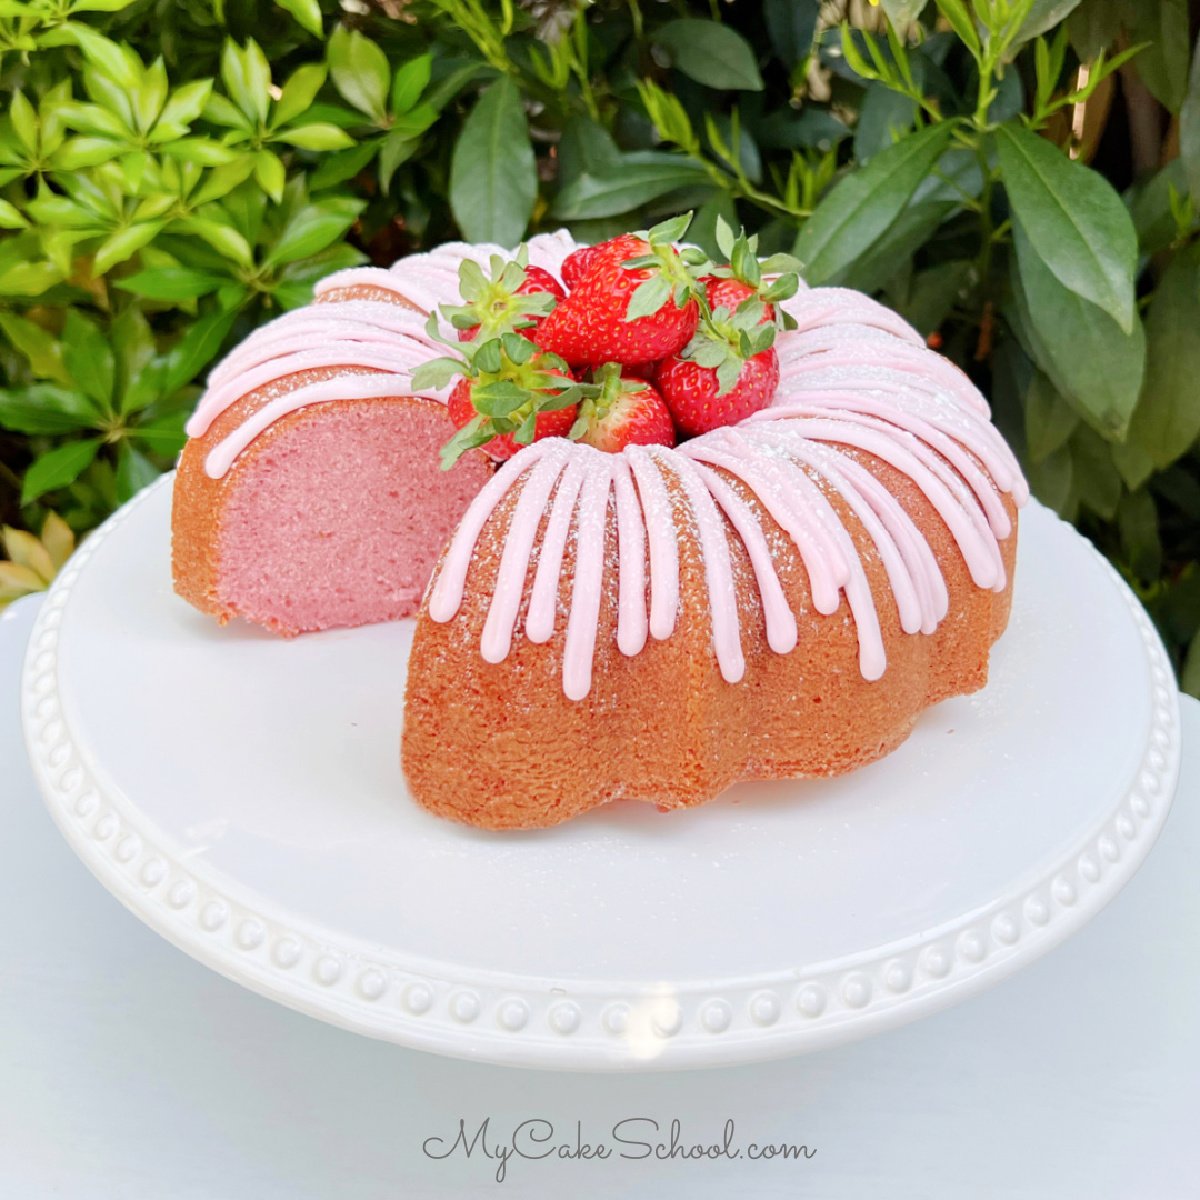 https://www.mycakeschool.com/images/2023/04/strawberry-bundt-cake-featured-image.jpg